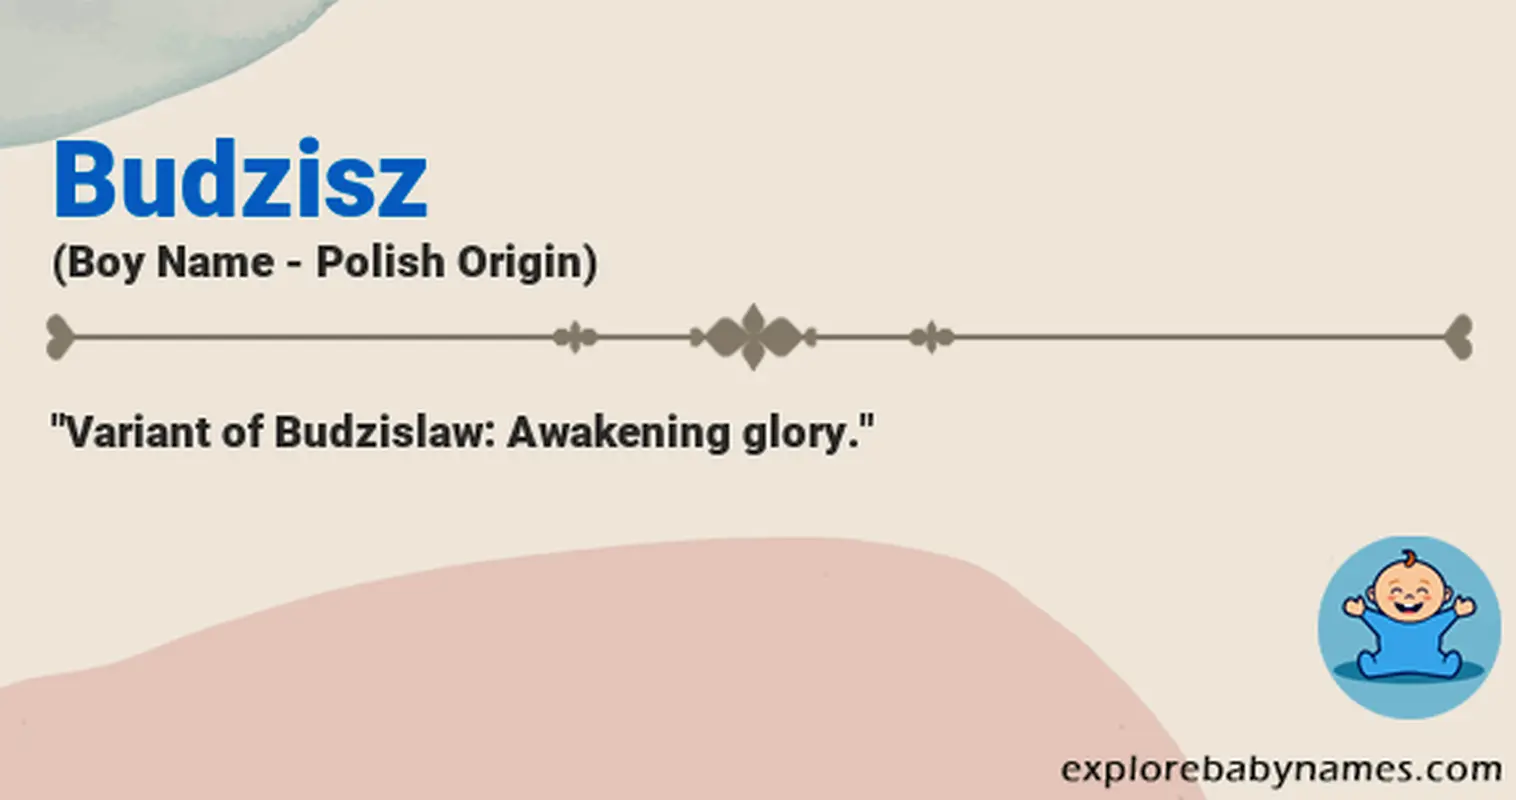 Meaning of Budzisz